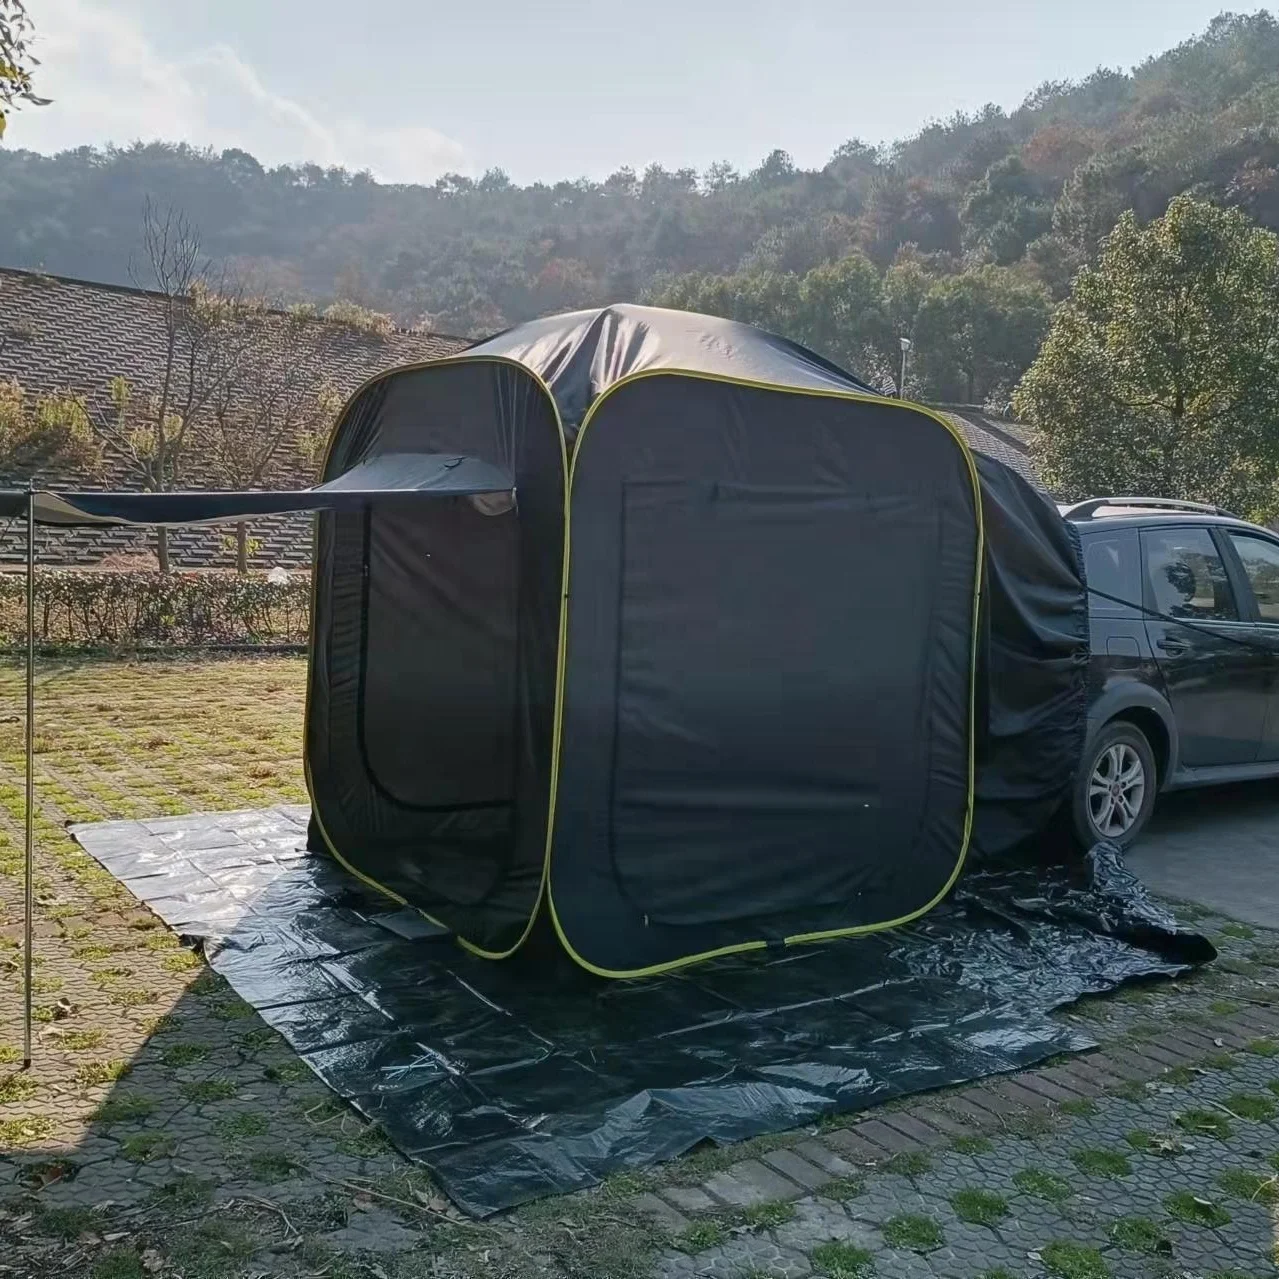 

Car rear awning Outdoor portable camping car rear tent Multi-person rainproof pergola Camping canopy tent, Amry green